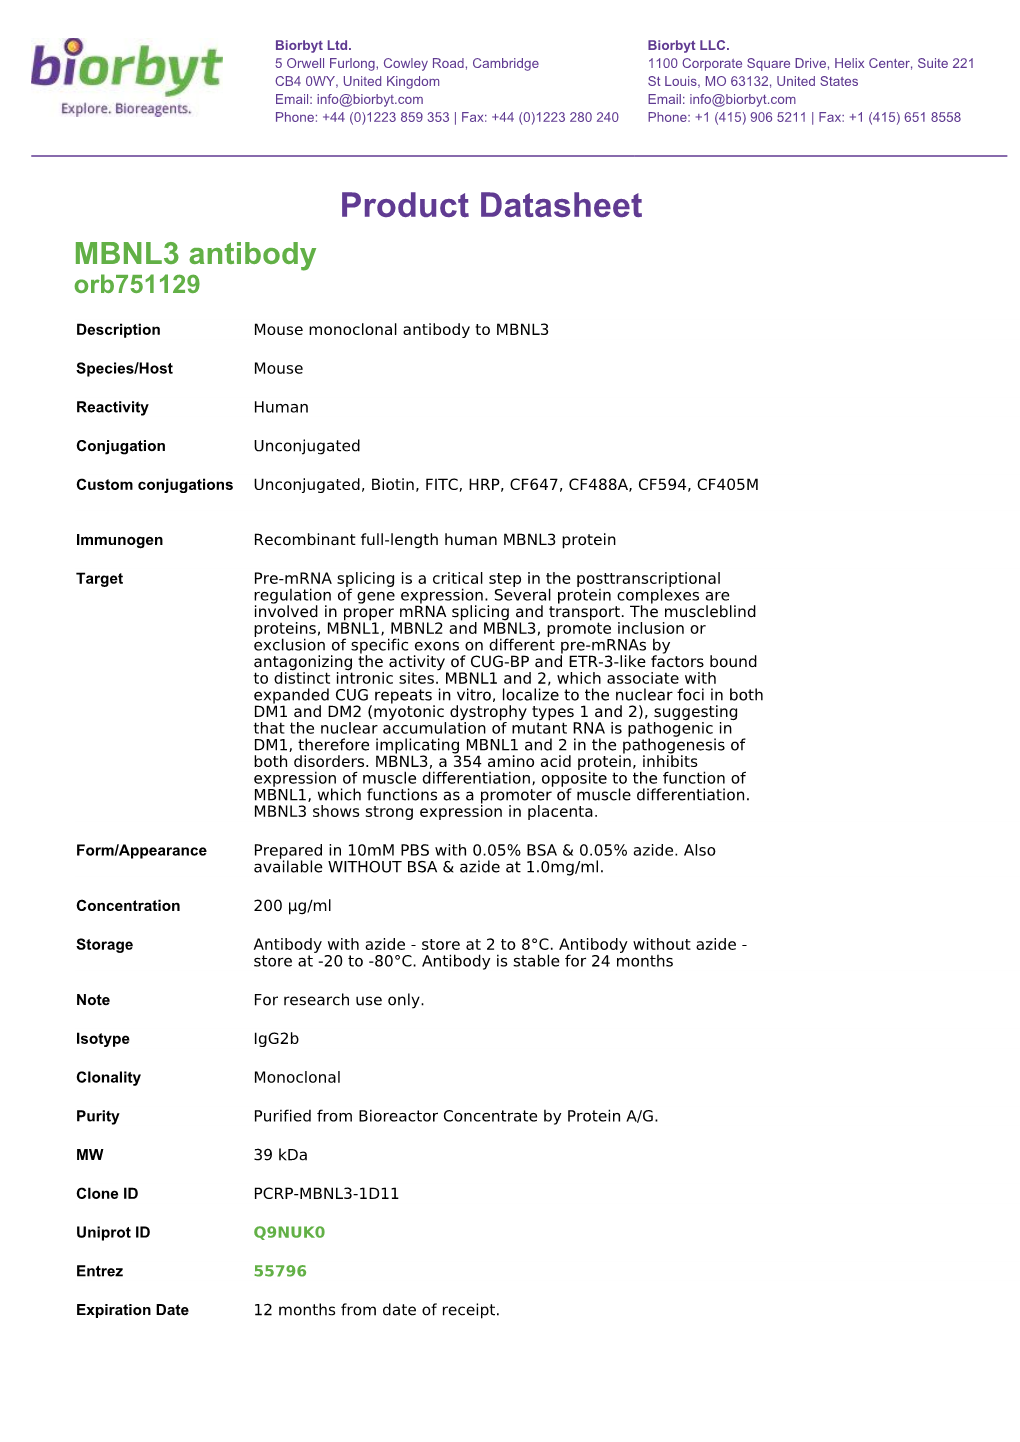 Product Datasheet MBNL3 Antibody Orb751129